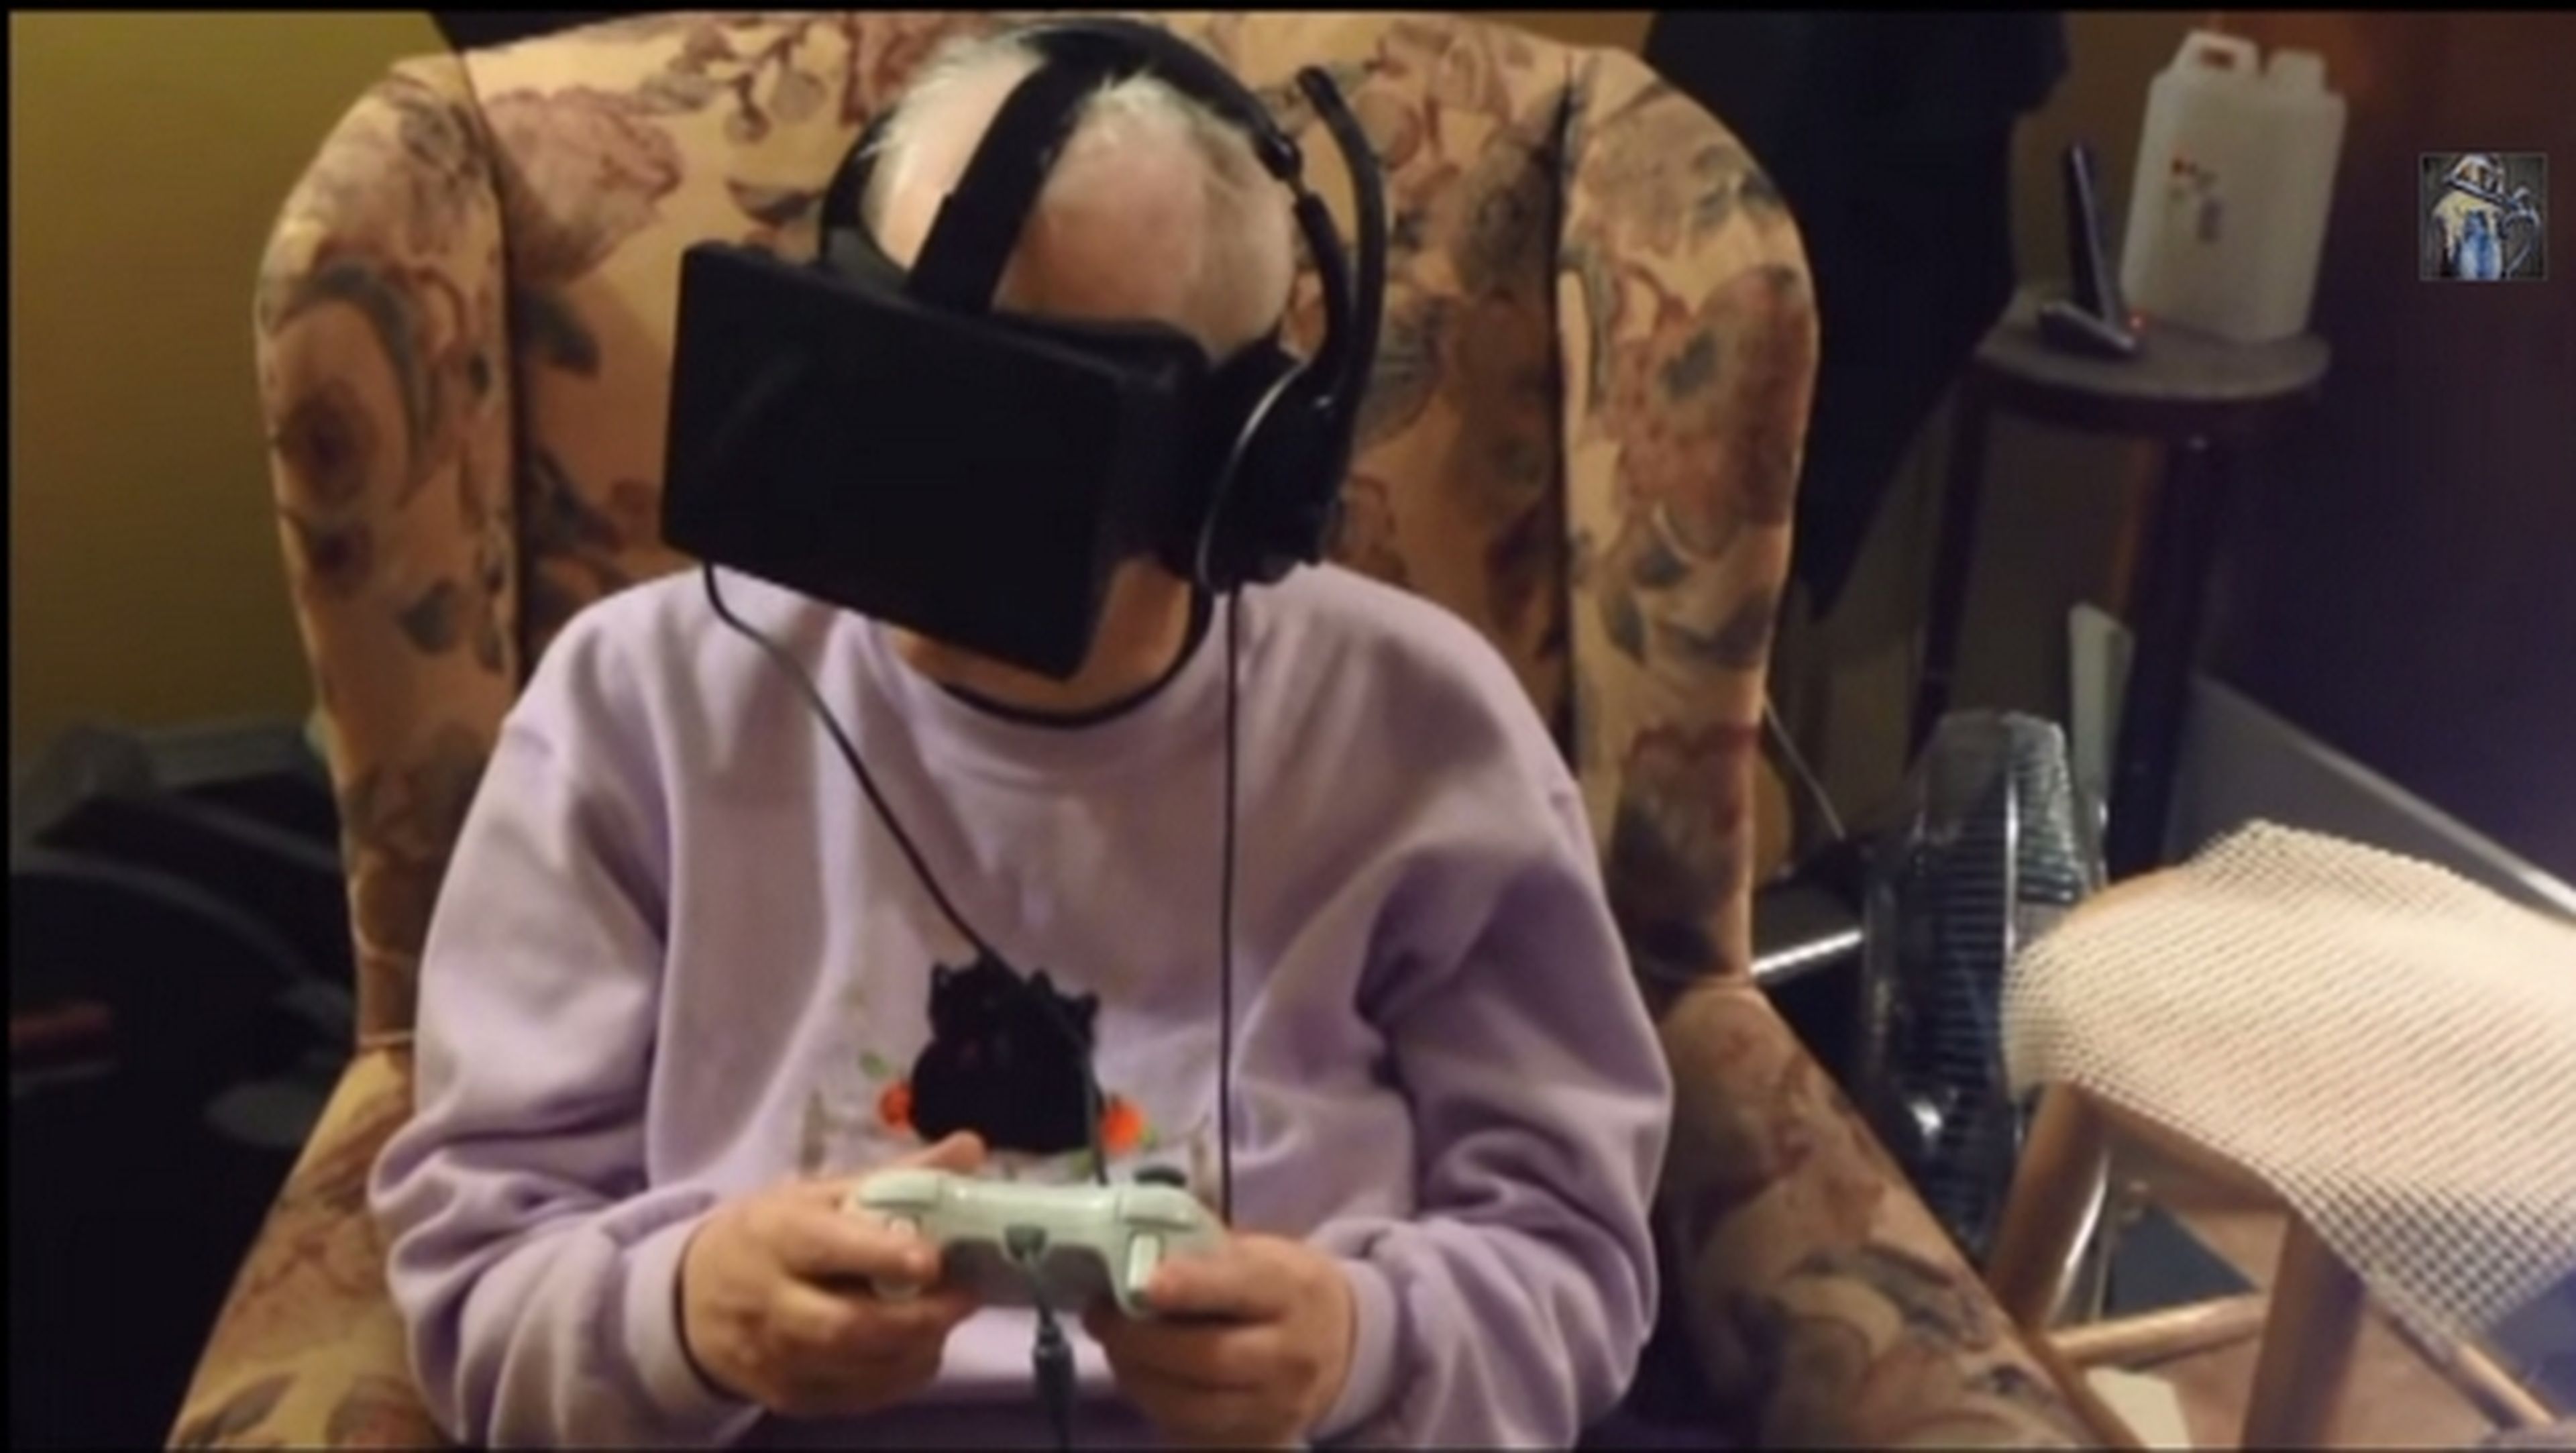 Anciana enferma de cáncer cumple último deseo antes de morir, gracias a las gafas de realidad virtual Oculus Rift.